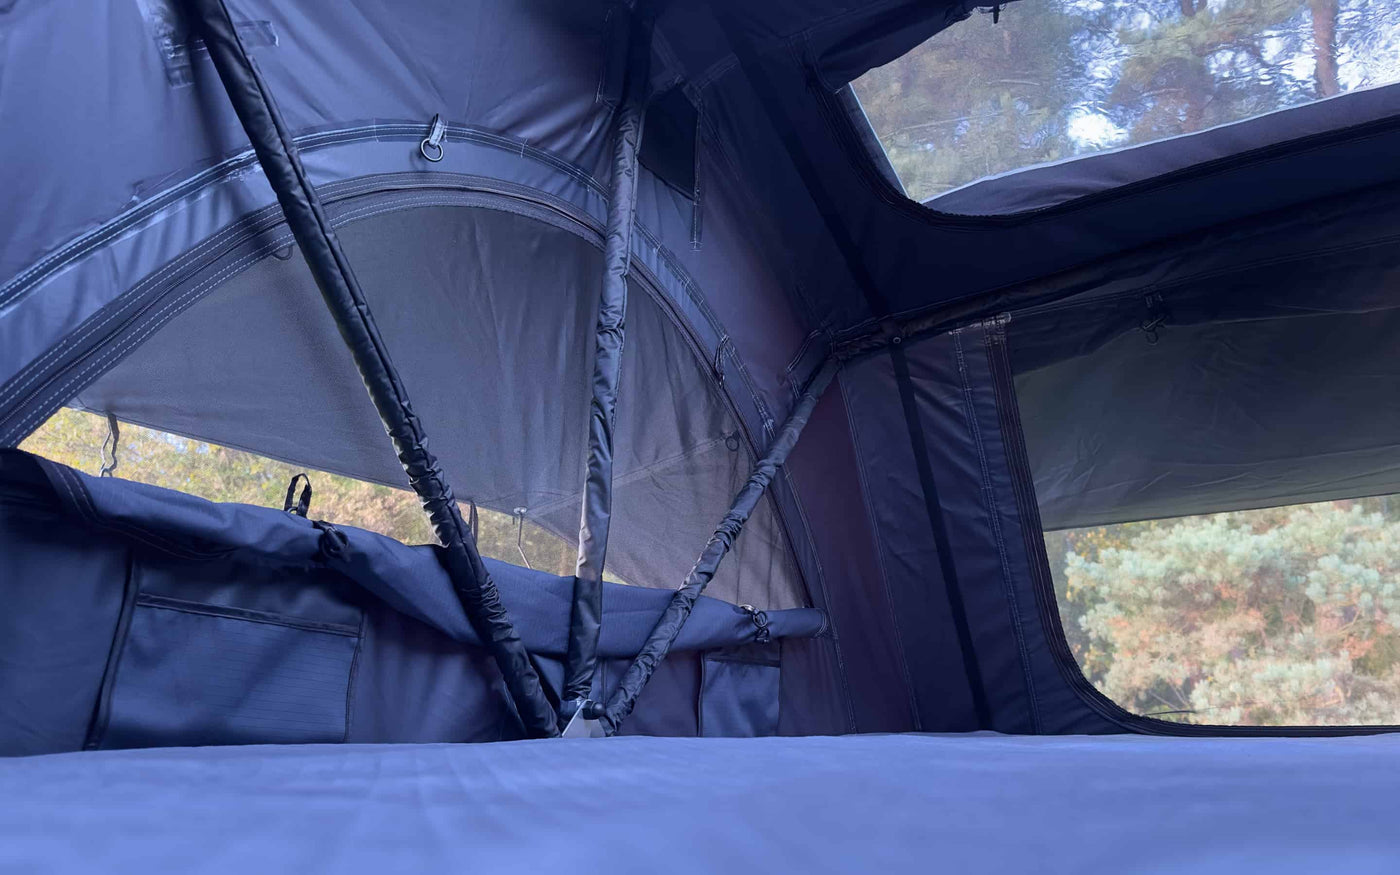 RoofBunk Explorer XL Soft Shell Roof Tent